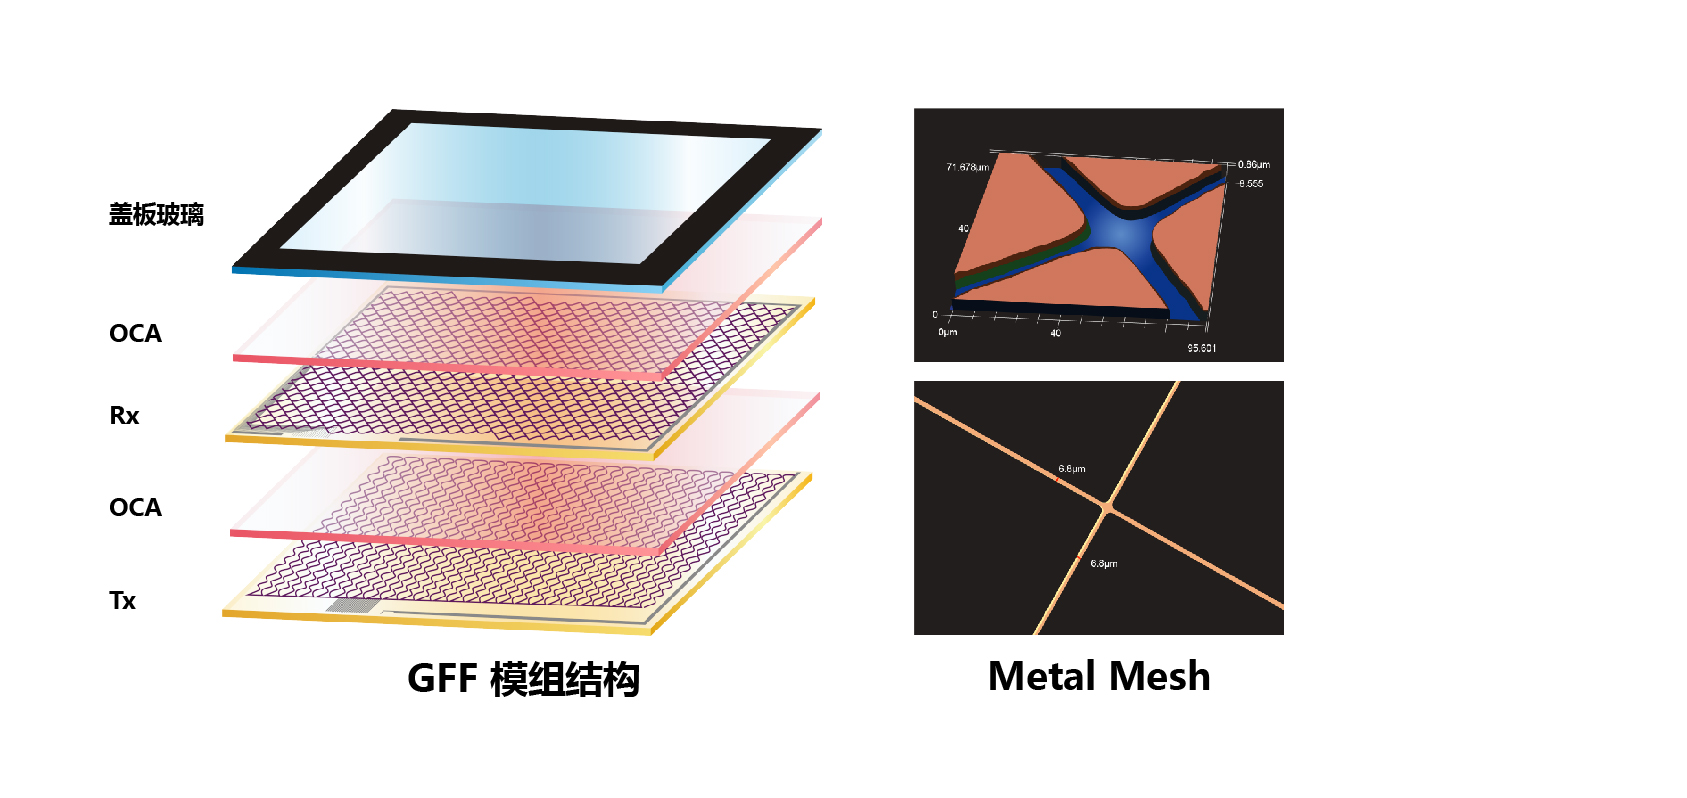 Metal Mesh Ultra-fine Circuit Technology